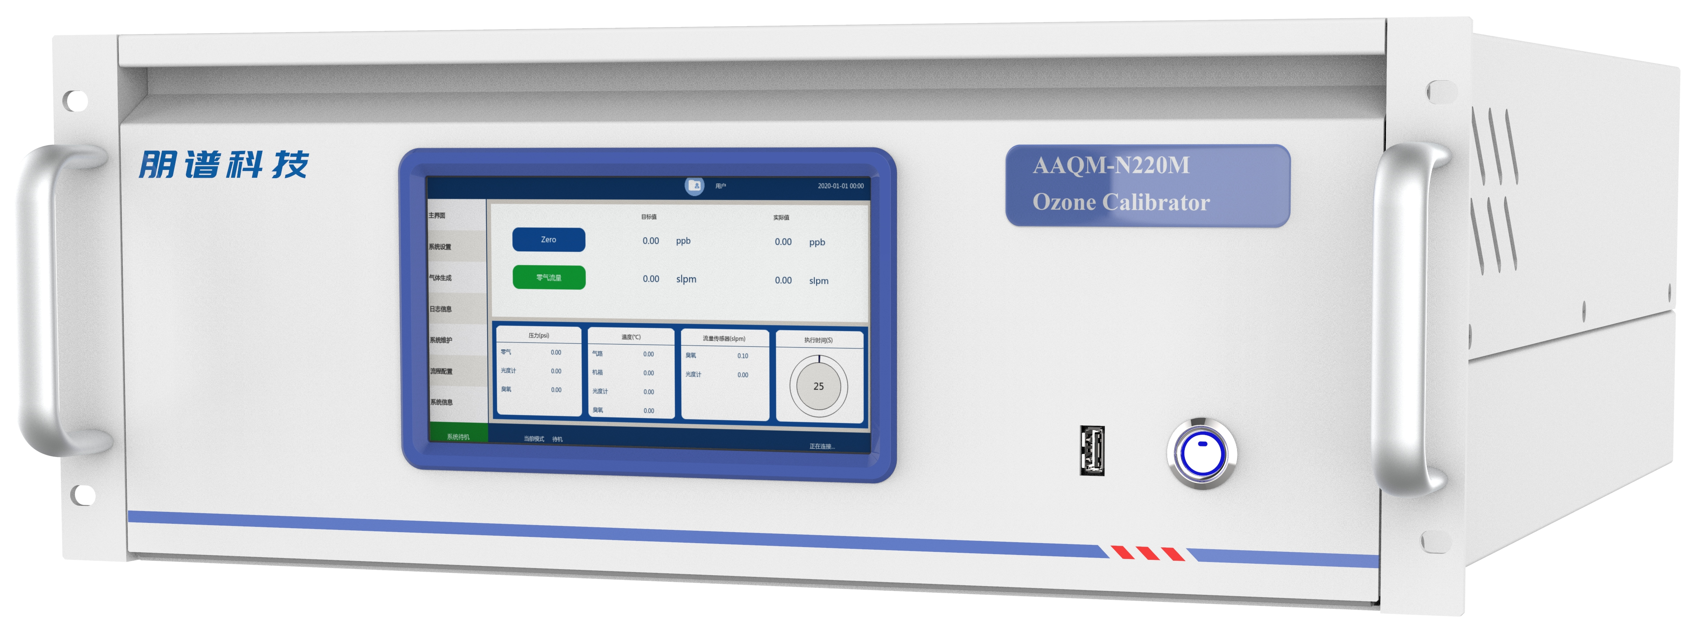 AAQM-N220M 臭氧校准仪